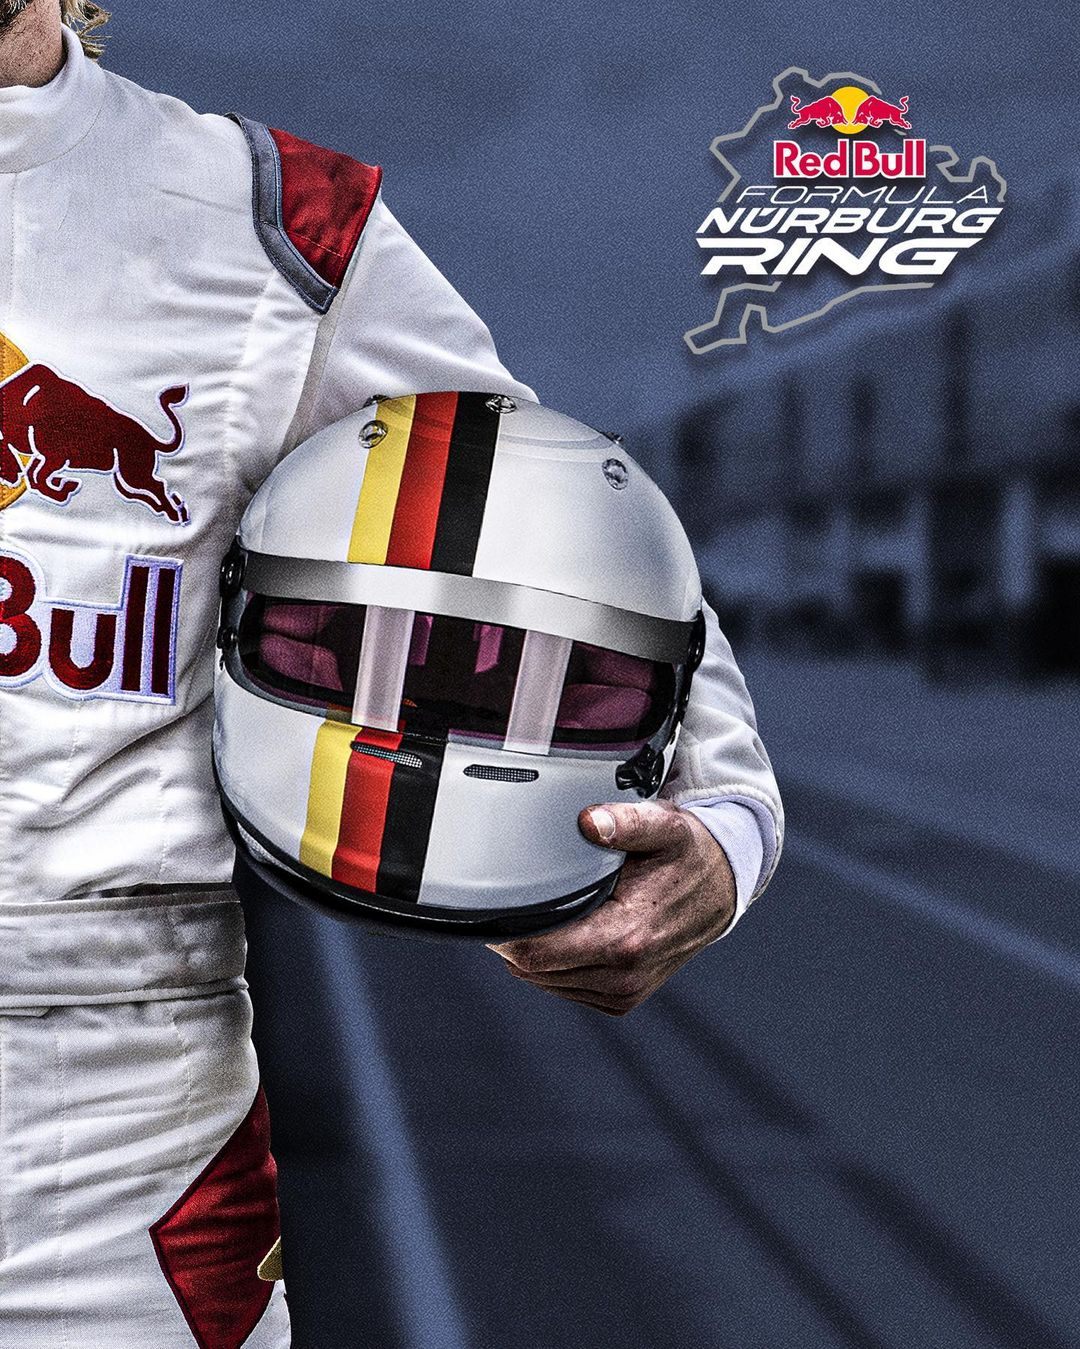 Red Bull Formula Nurburgring © Red Bull Deutschland